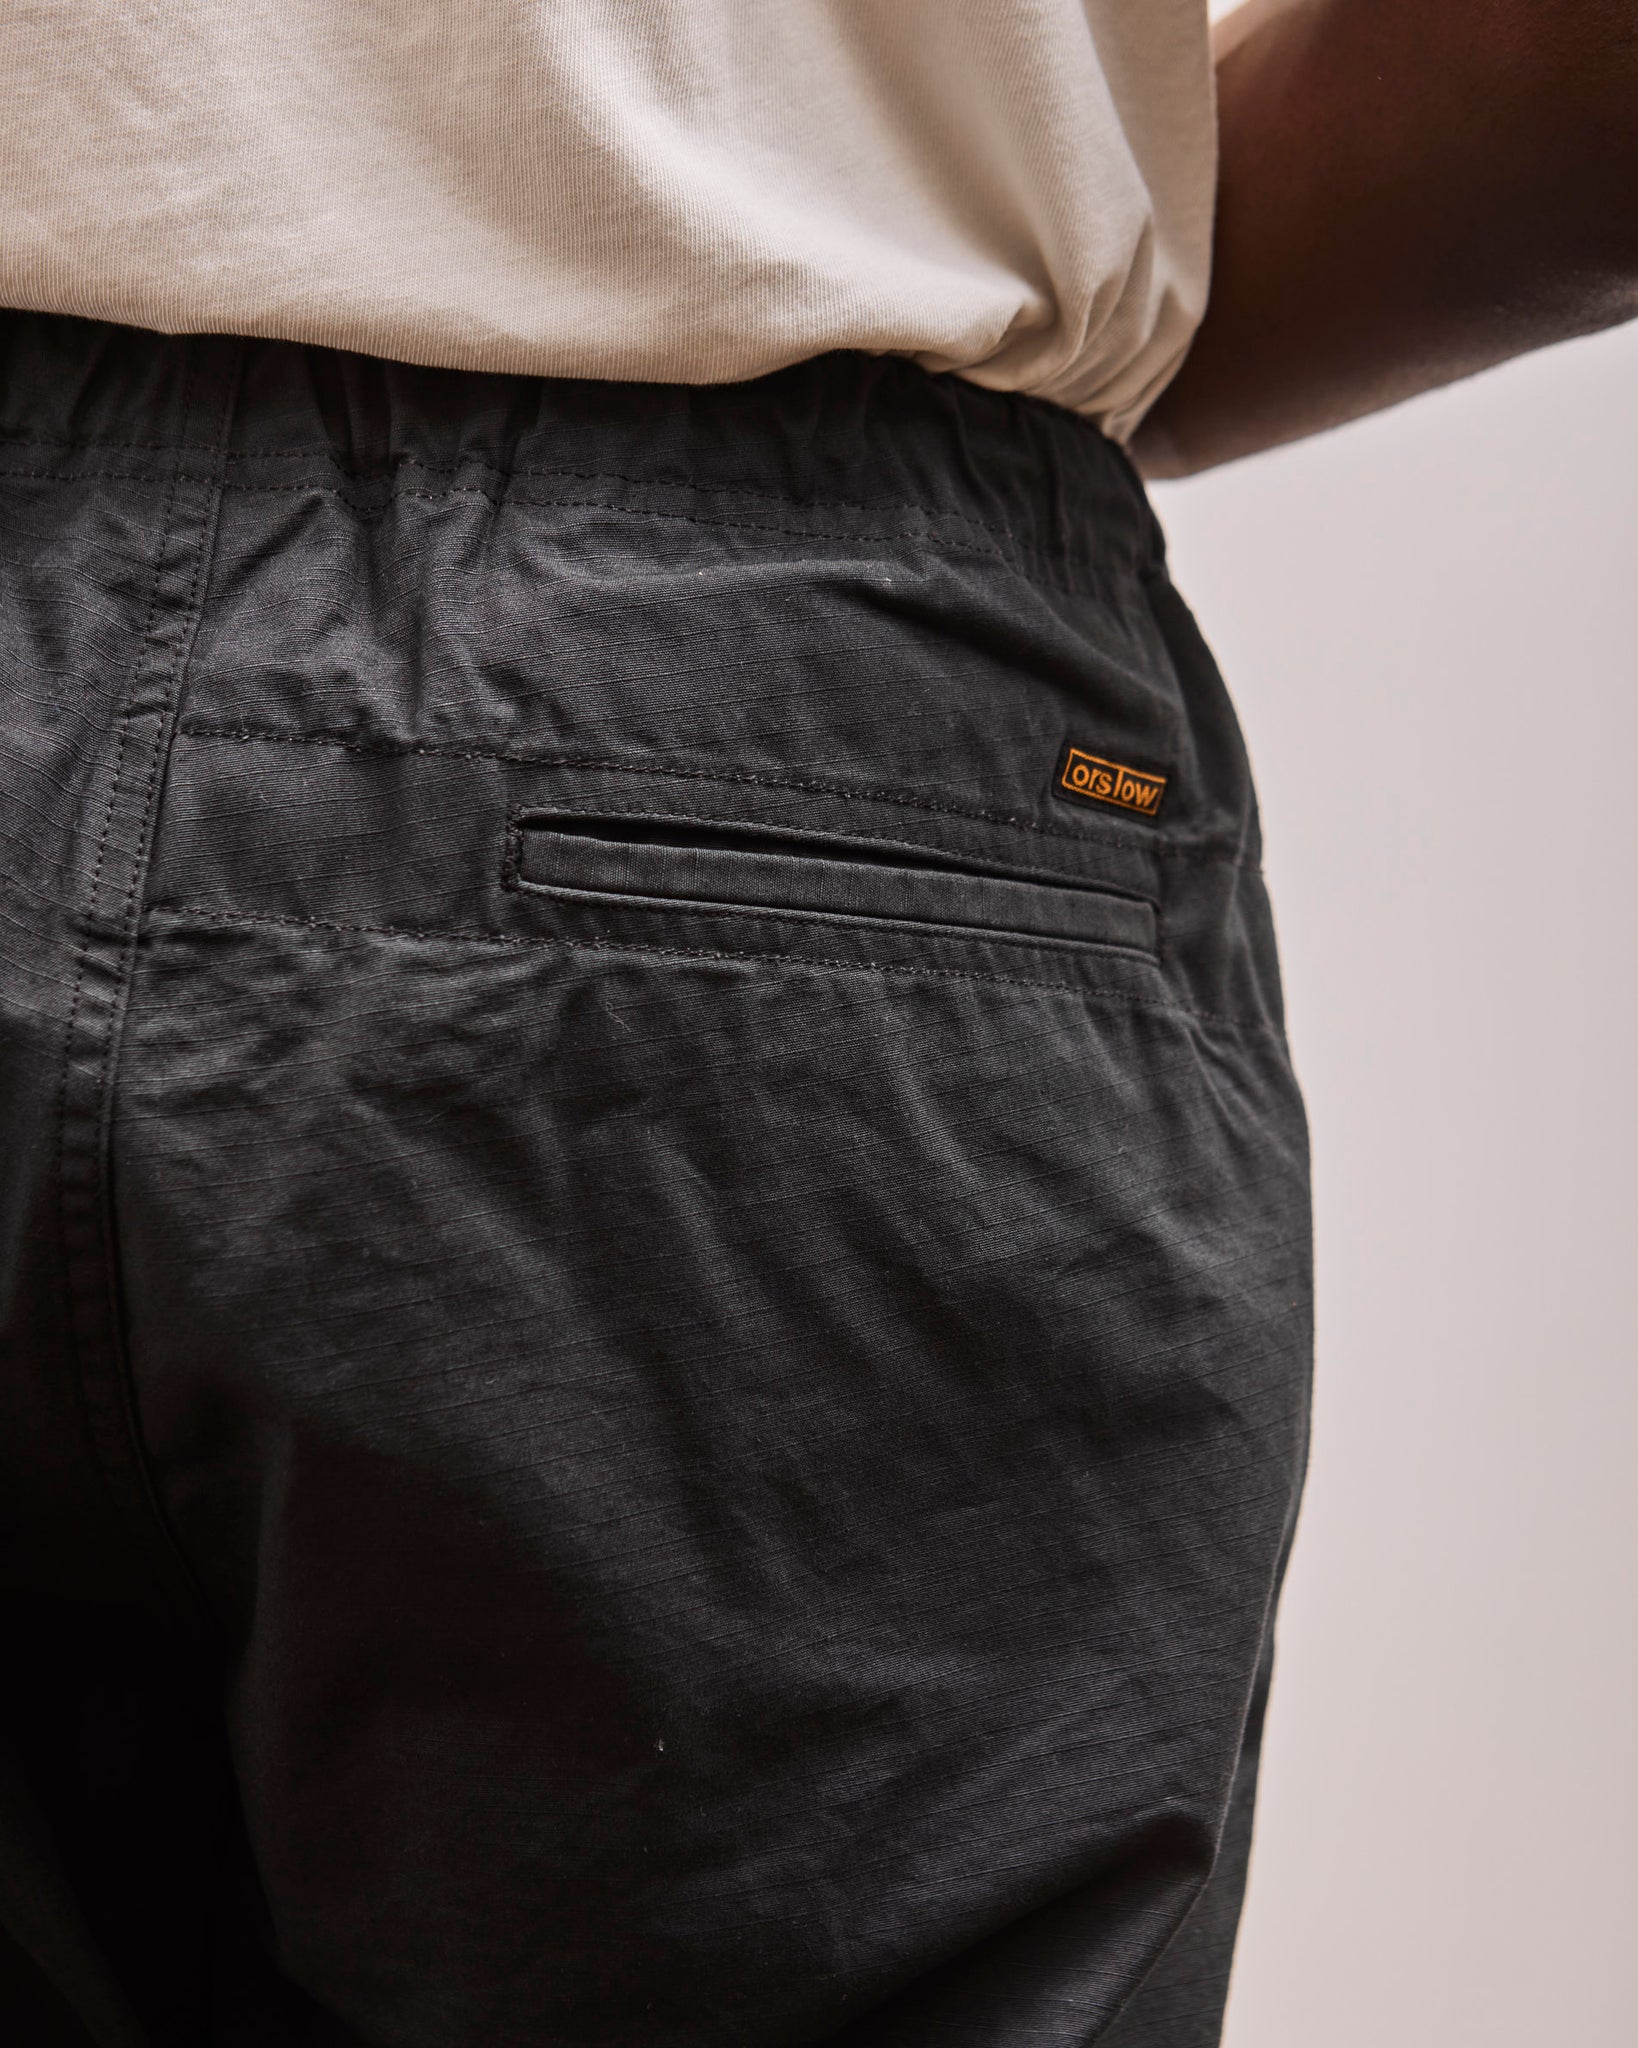 orSlow Unisex New Yorker Pant, Sumi Black, back pocket detail